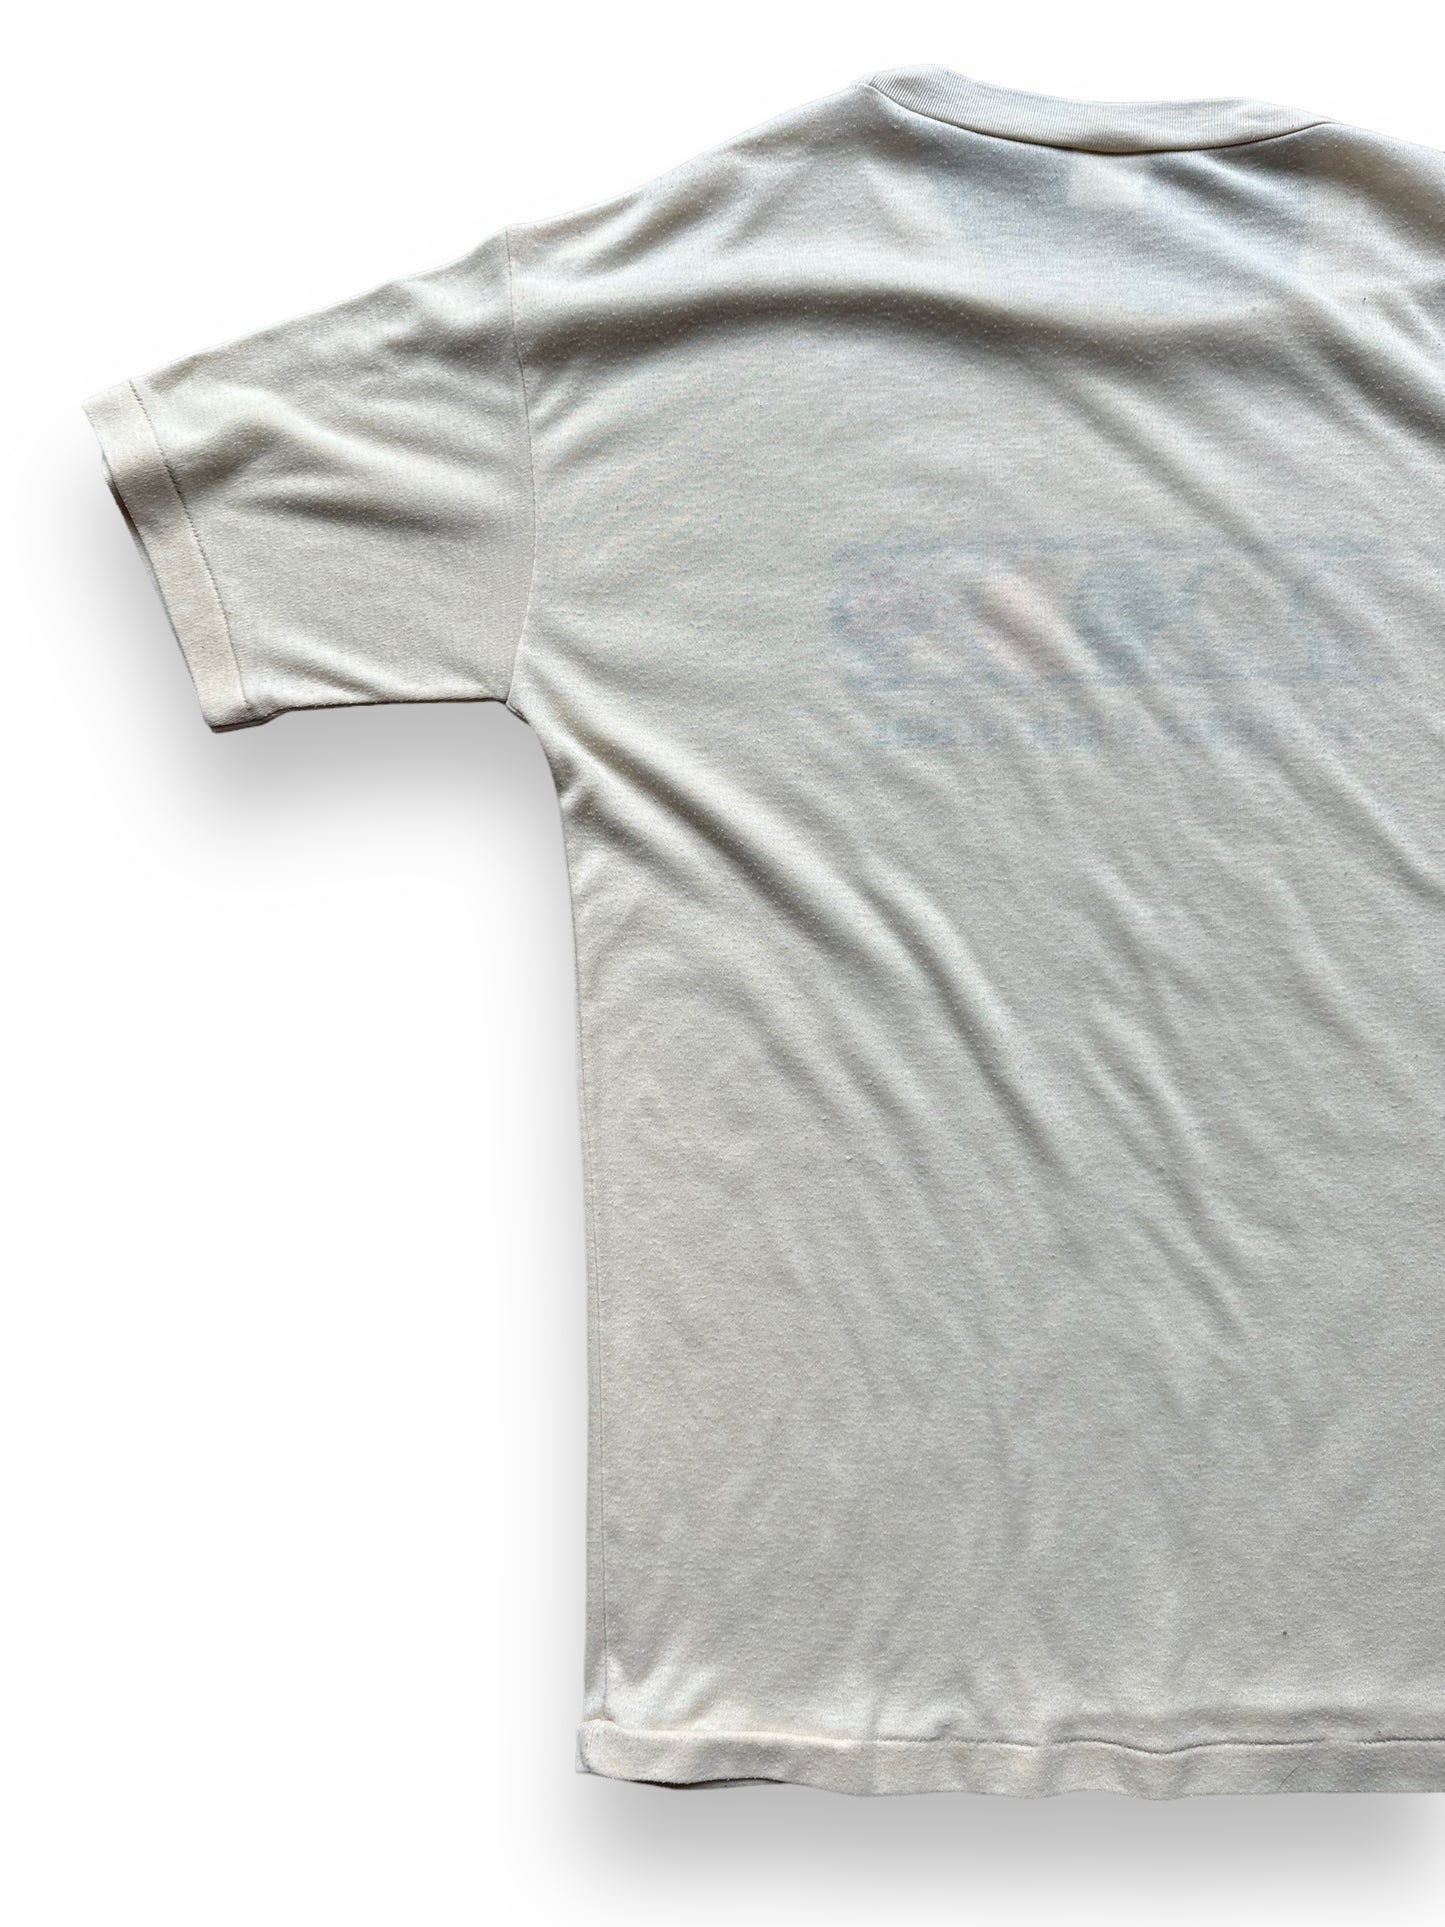 Back Left sleeve shot of Vintage Virgin Islands Tee SZ S | Vintage T-Shirts Seattle | Barn Owl Vintage Tees Seattle